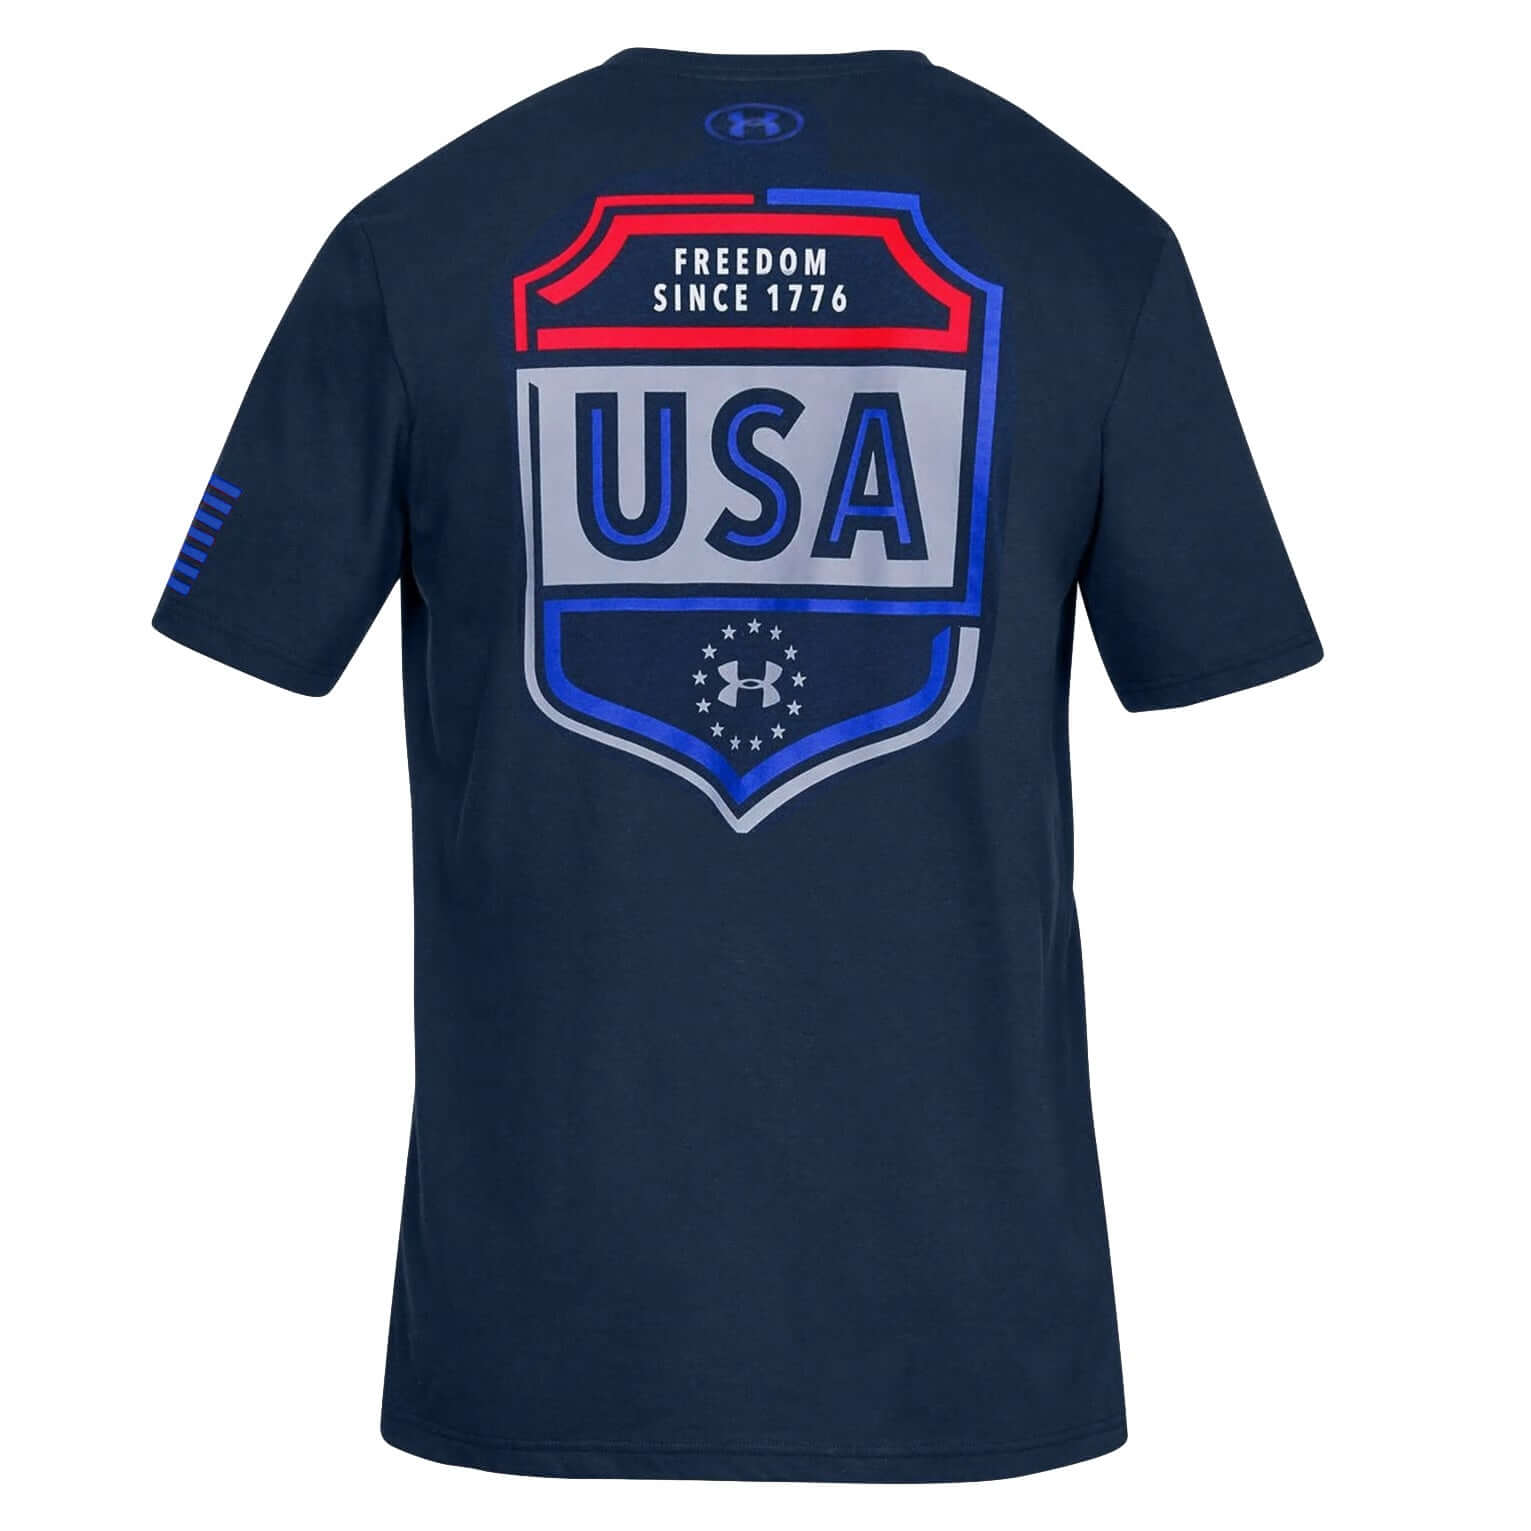 Under Armour USA Emblem T-Shirt Navy – The Flag Shirt